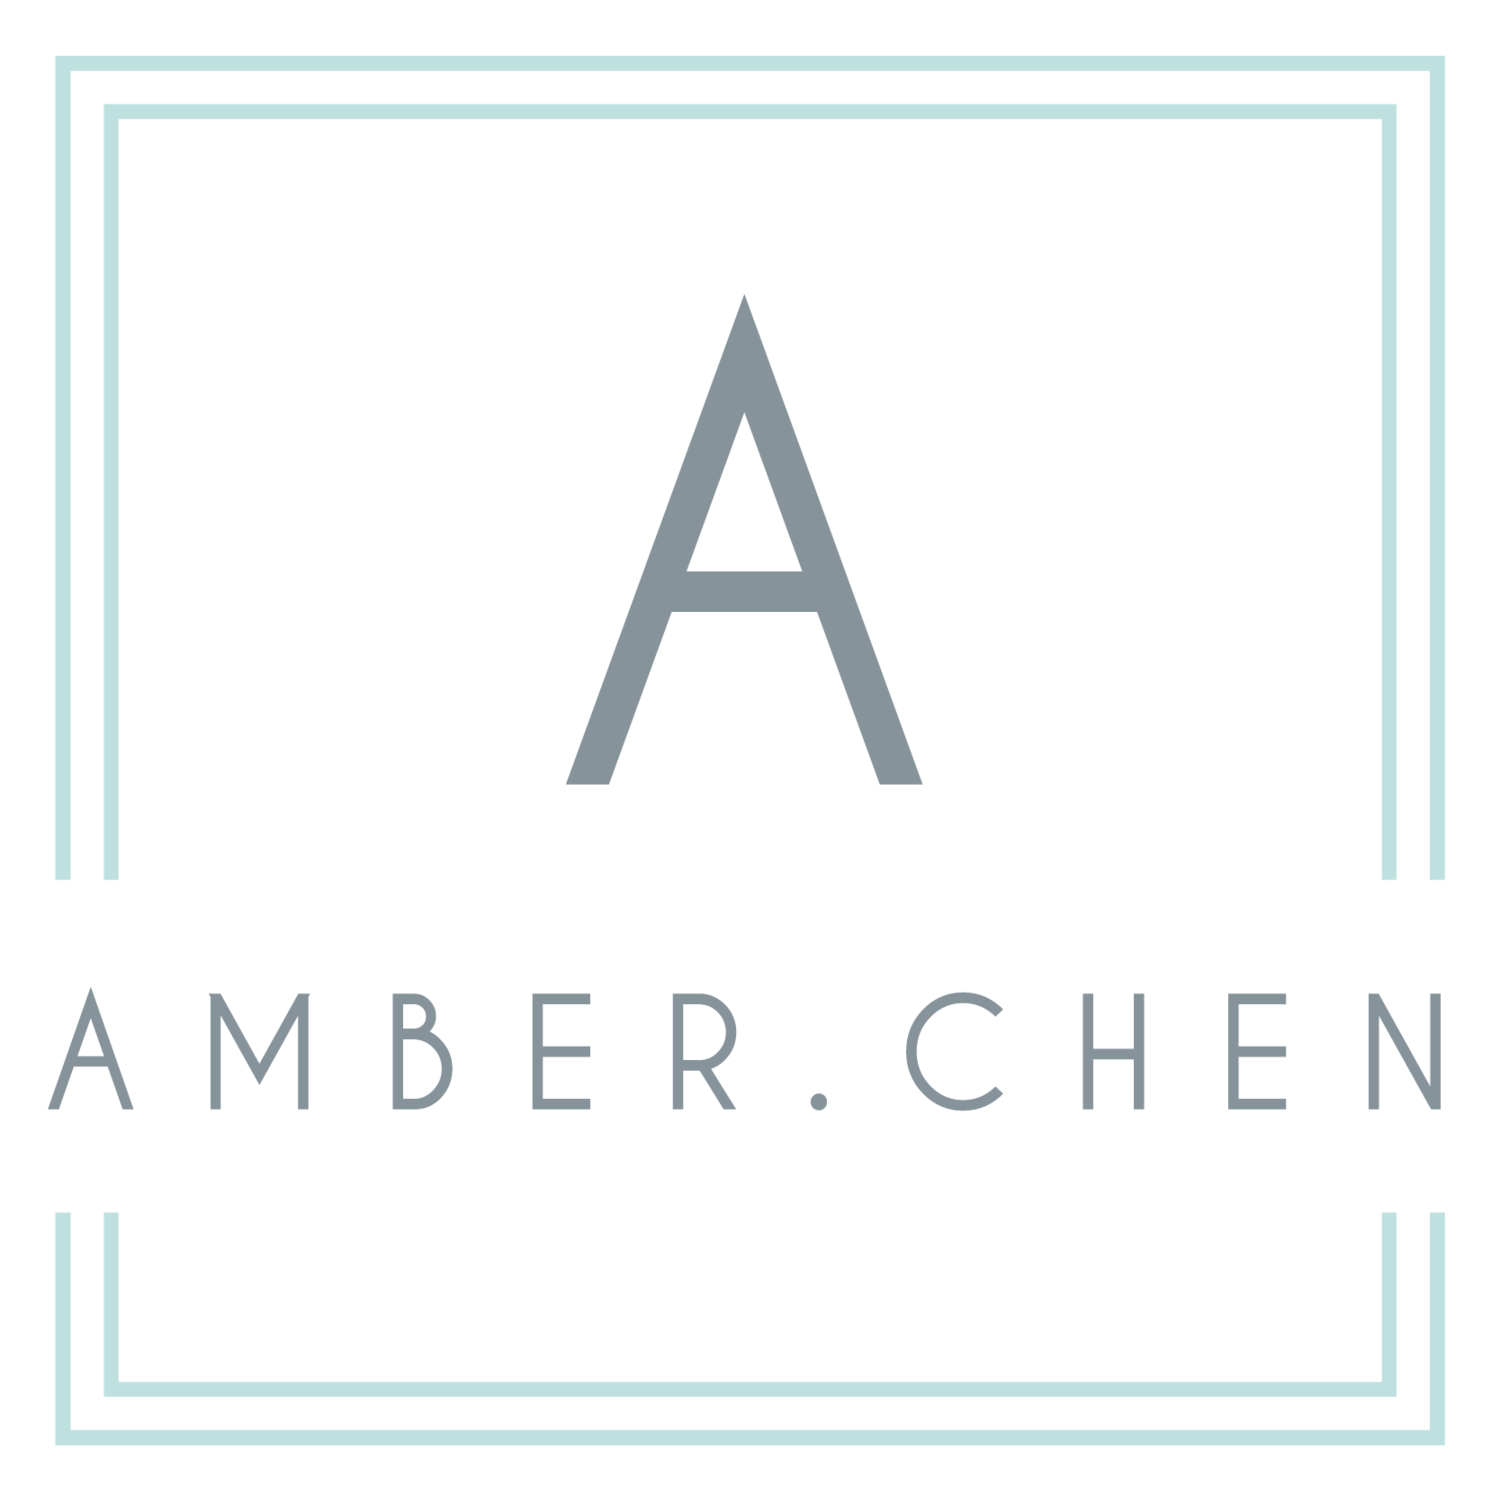 AMBER CHEN